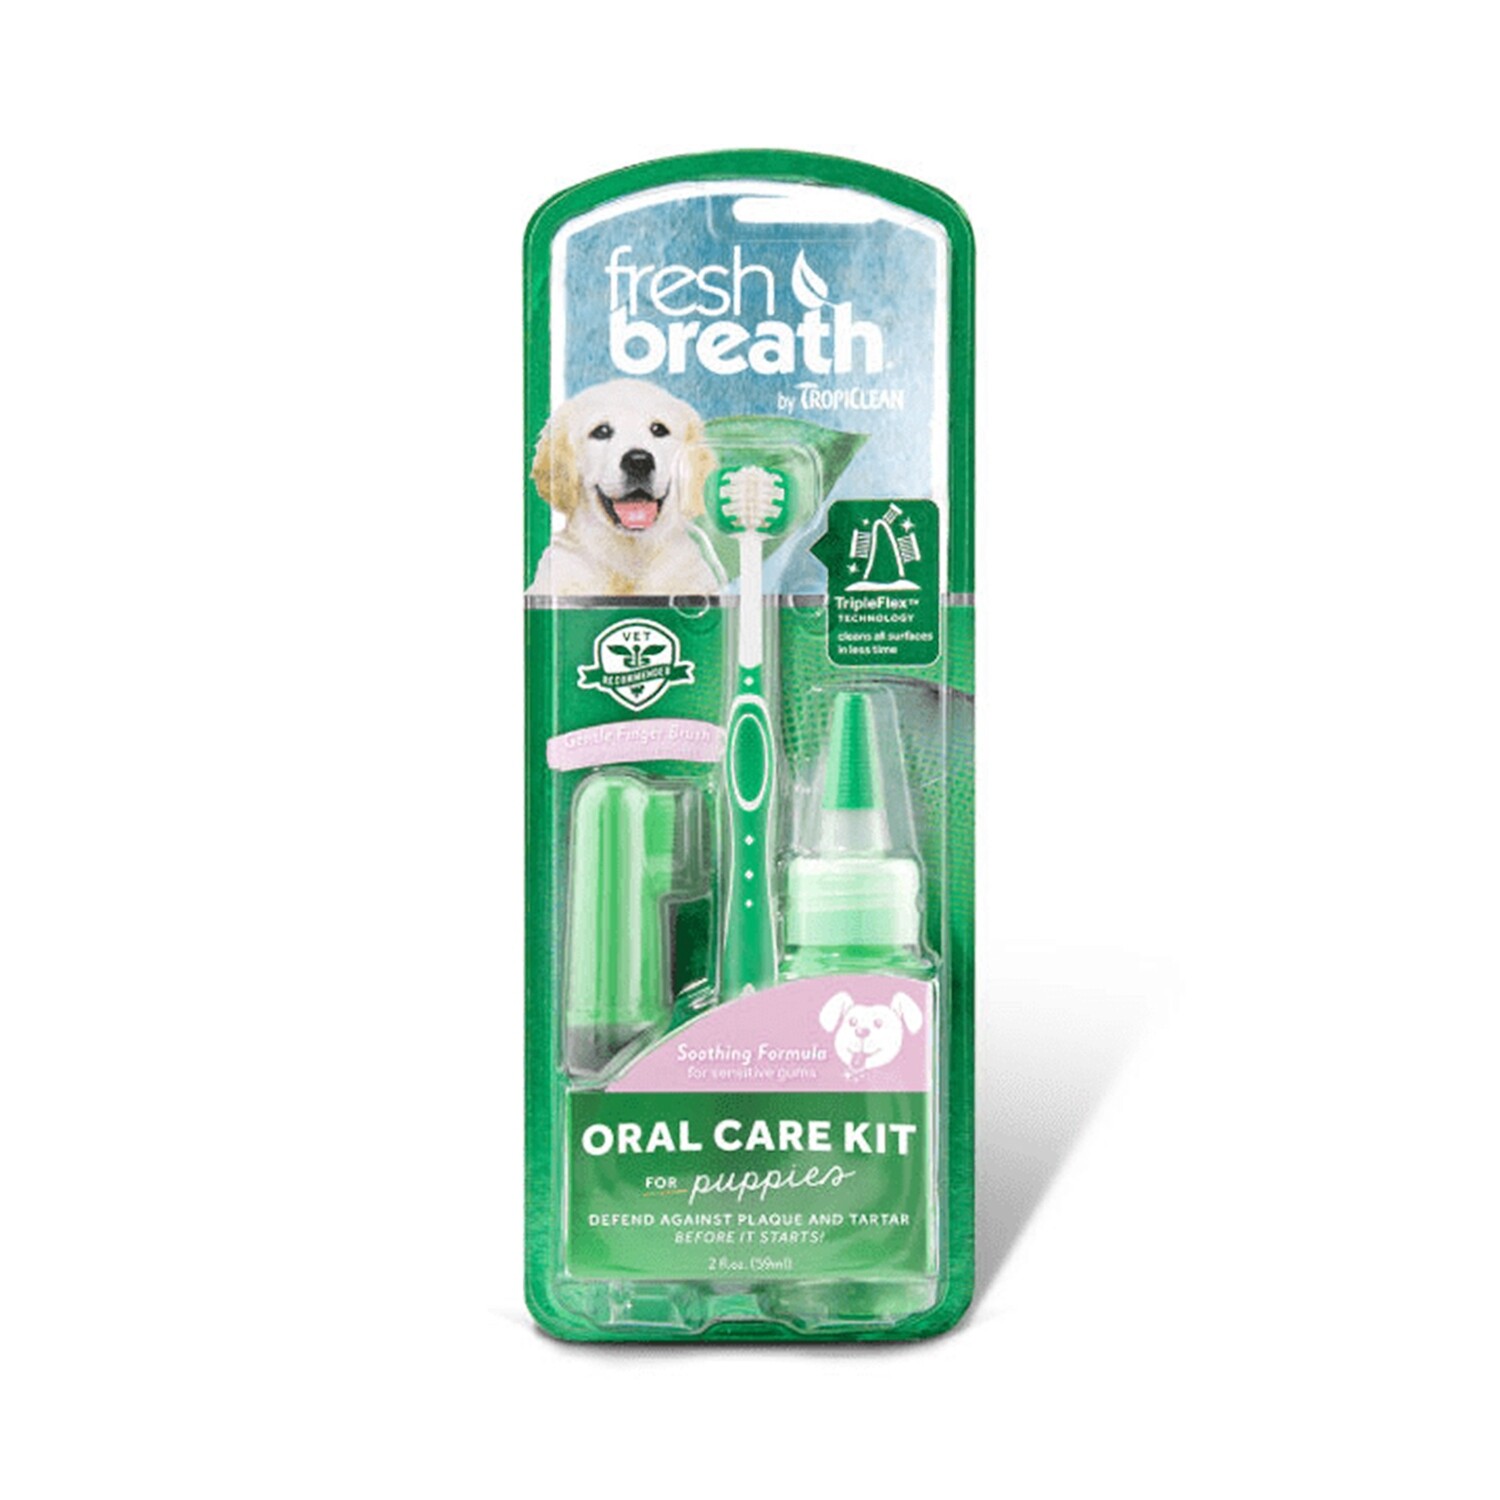 TropiClean Fresh Breath Oral Care Kit for Puppies - 口腔护理洁齿套装 牙膏+牙刷+指套刷 幼犬专用